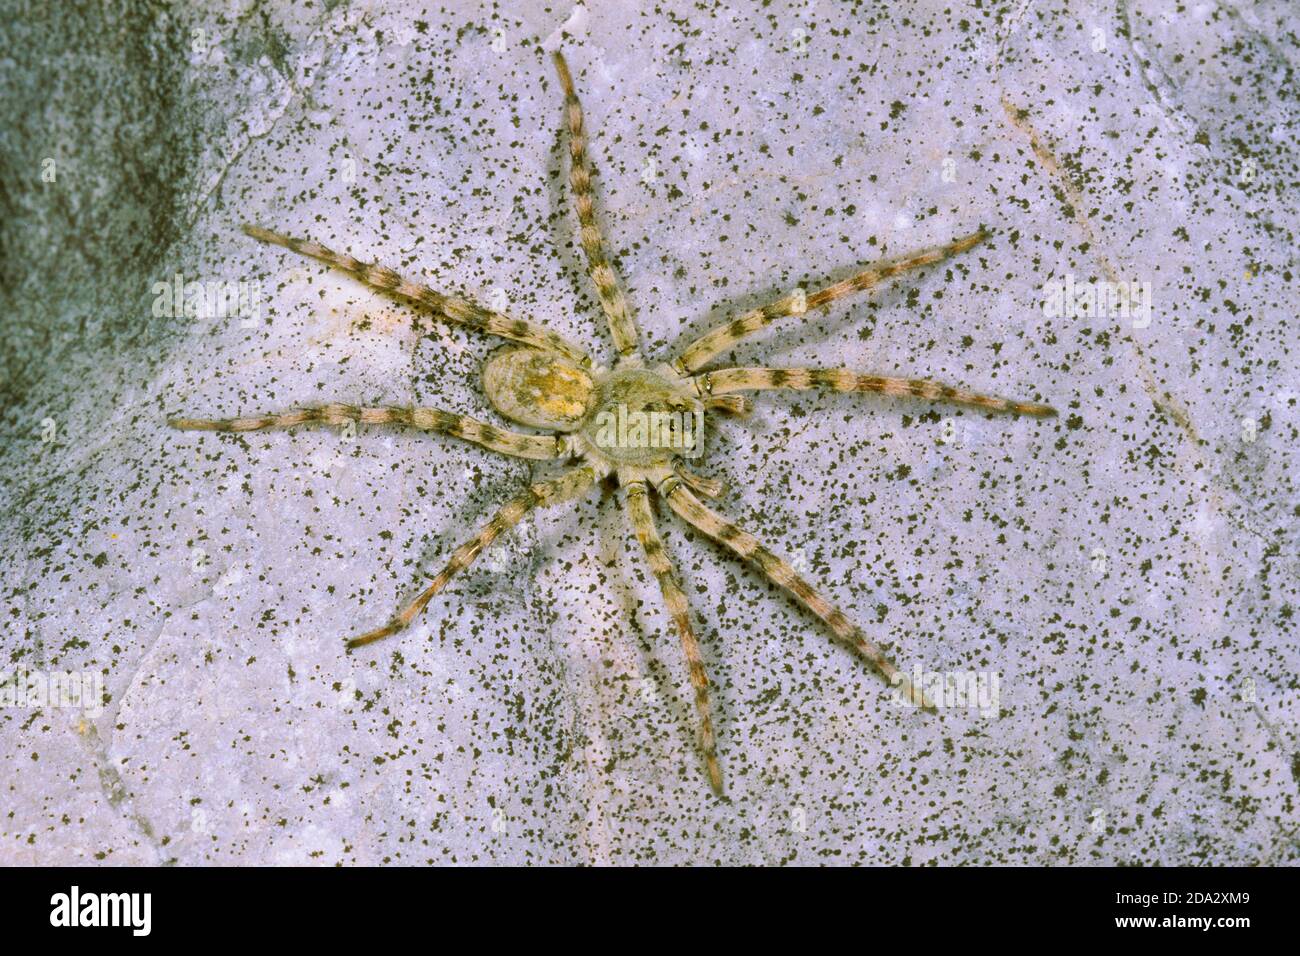 wolf spider, ground spider (Arctosa cinerea), on a stone, Germany Stock Photo